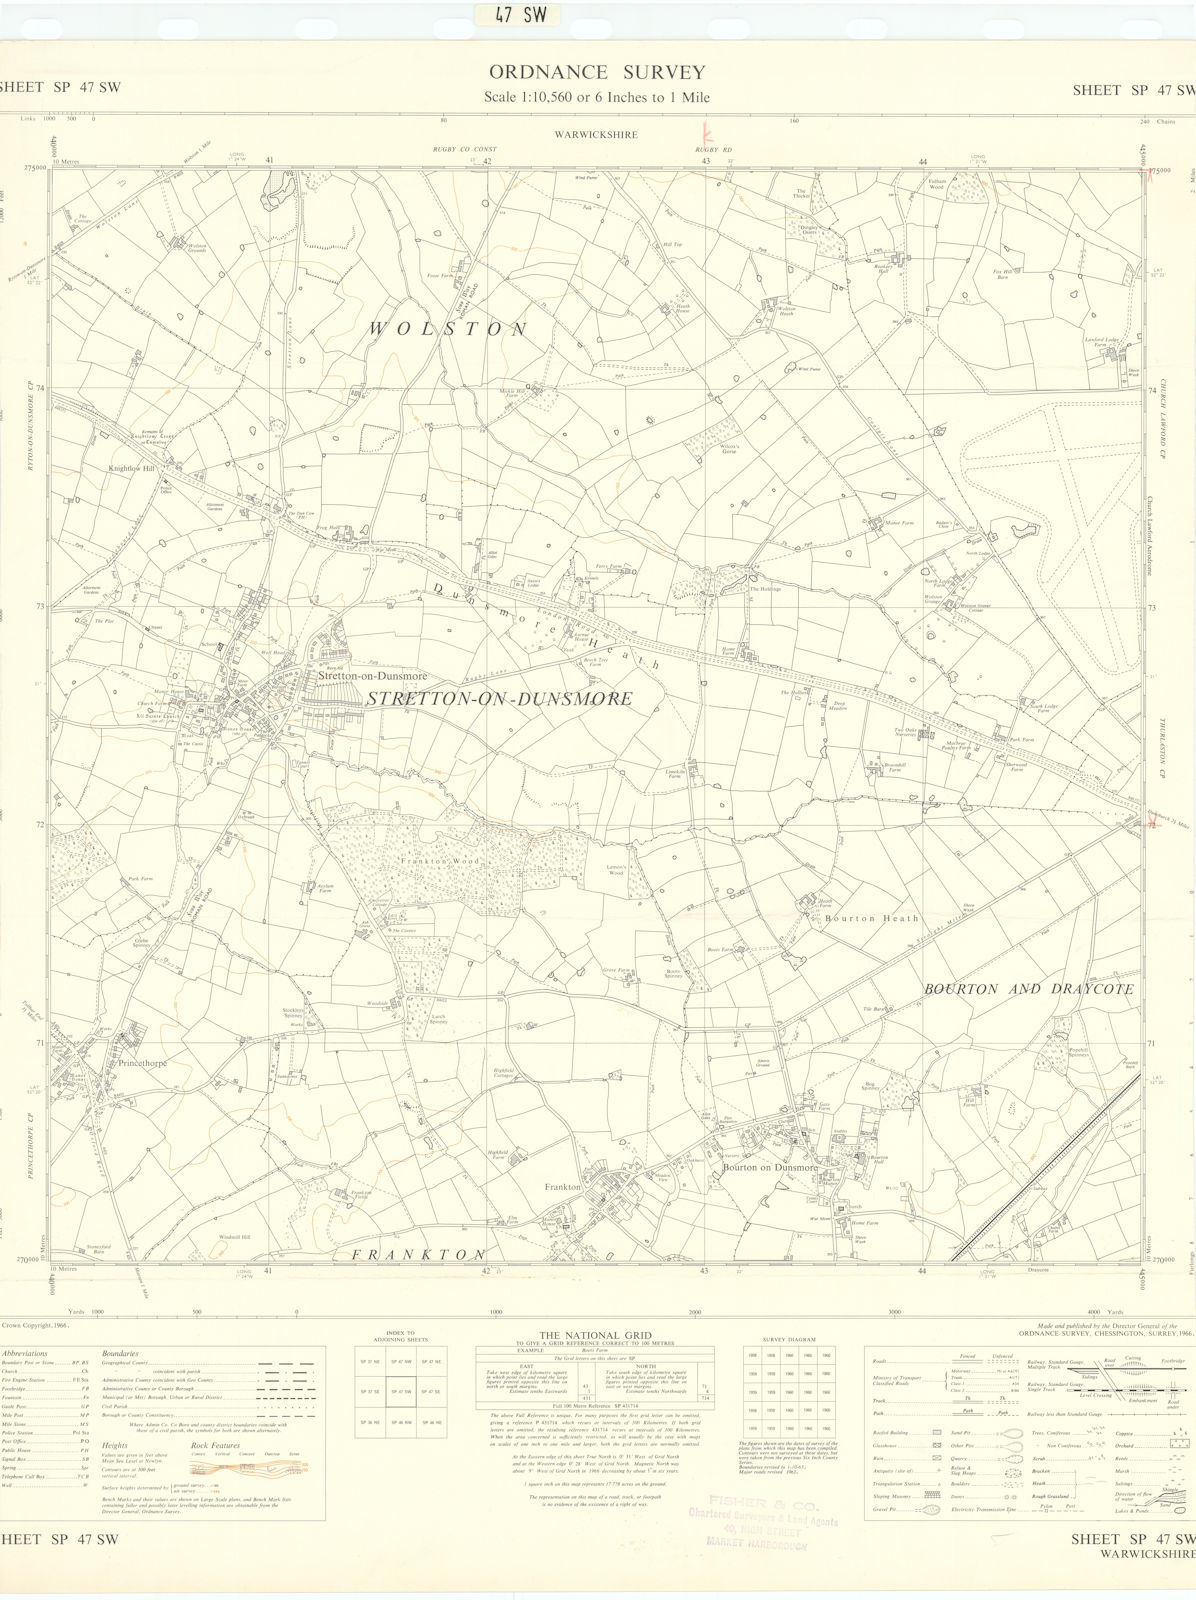 Ordnance Survey SP47SW Warks Bourton/Stretton-on-Dunsmore Frankton 1966 map